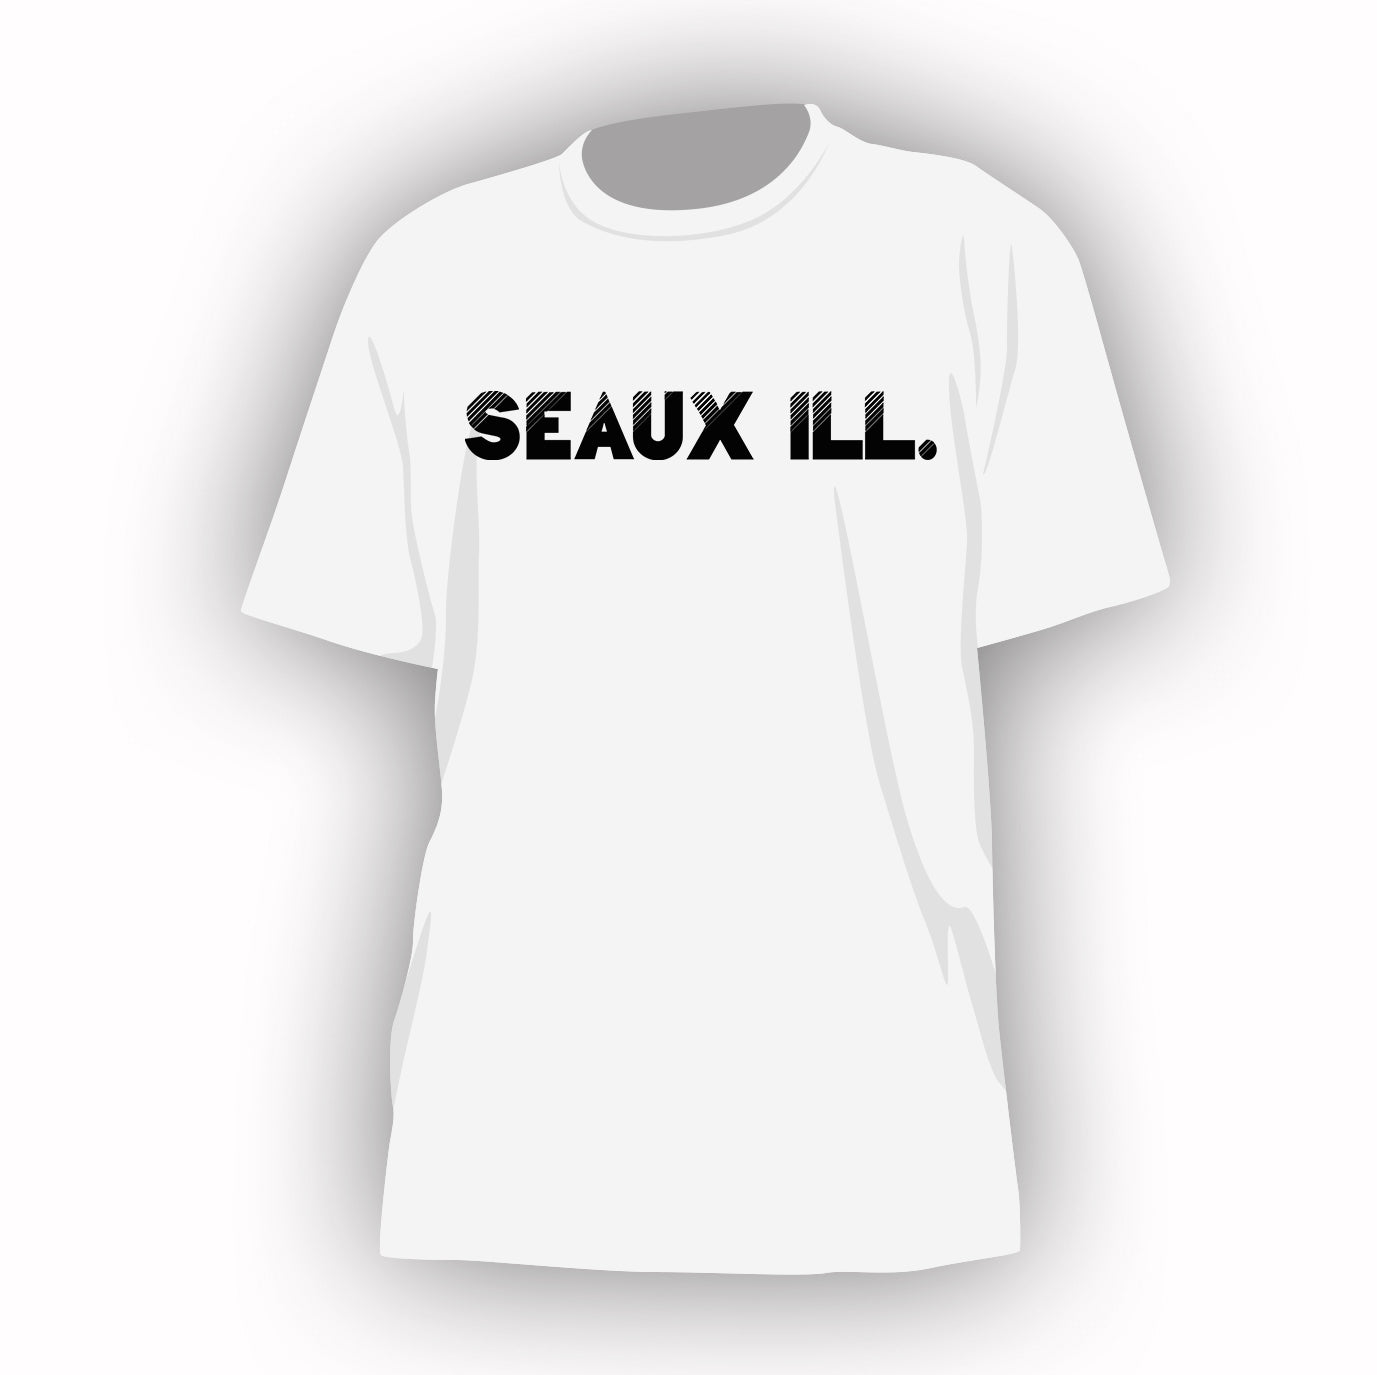 Seaux iLL. (So iLL)